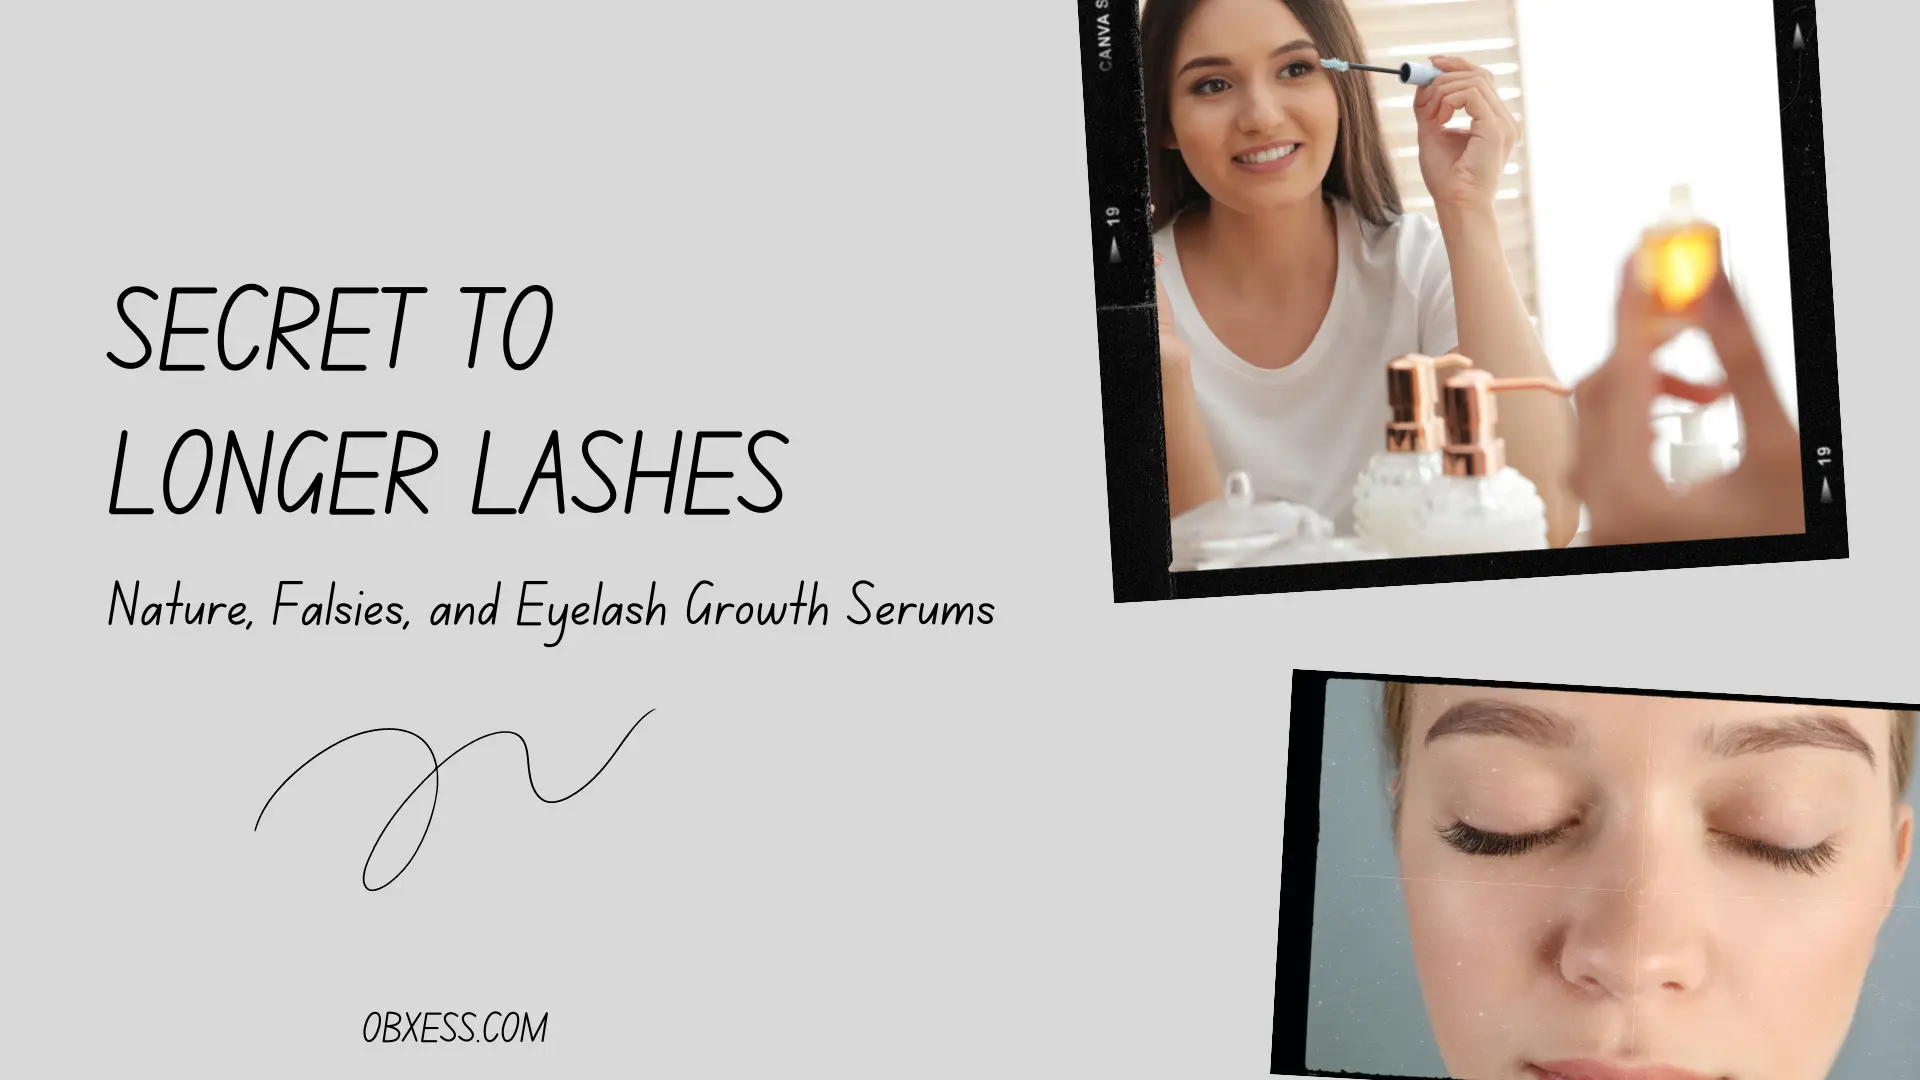 Secret To Longer Lashes: Nature, Falsies, and Eyelash Growth Serums